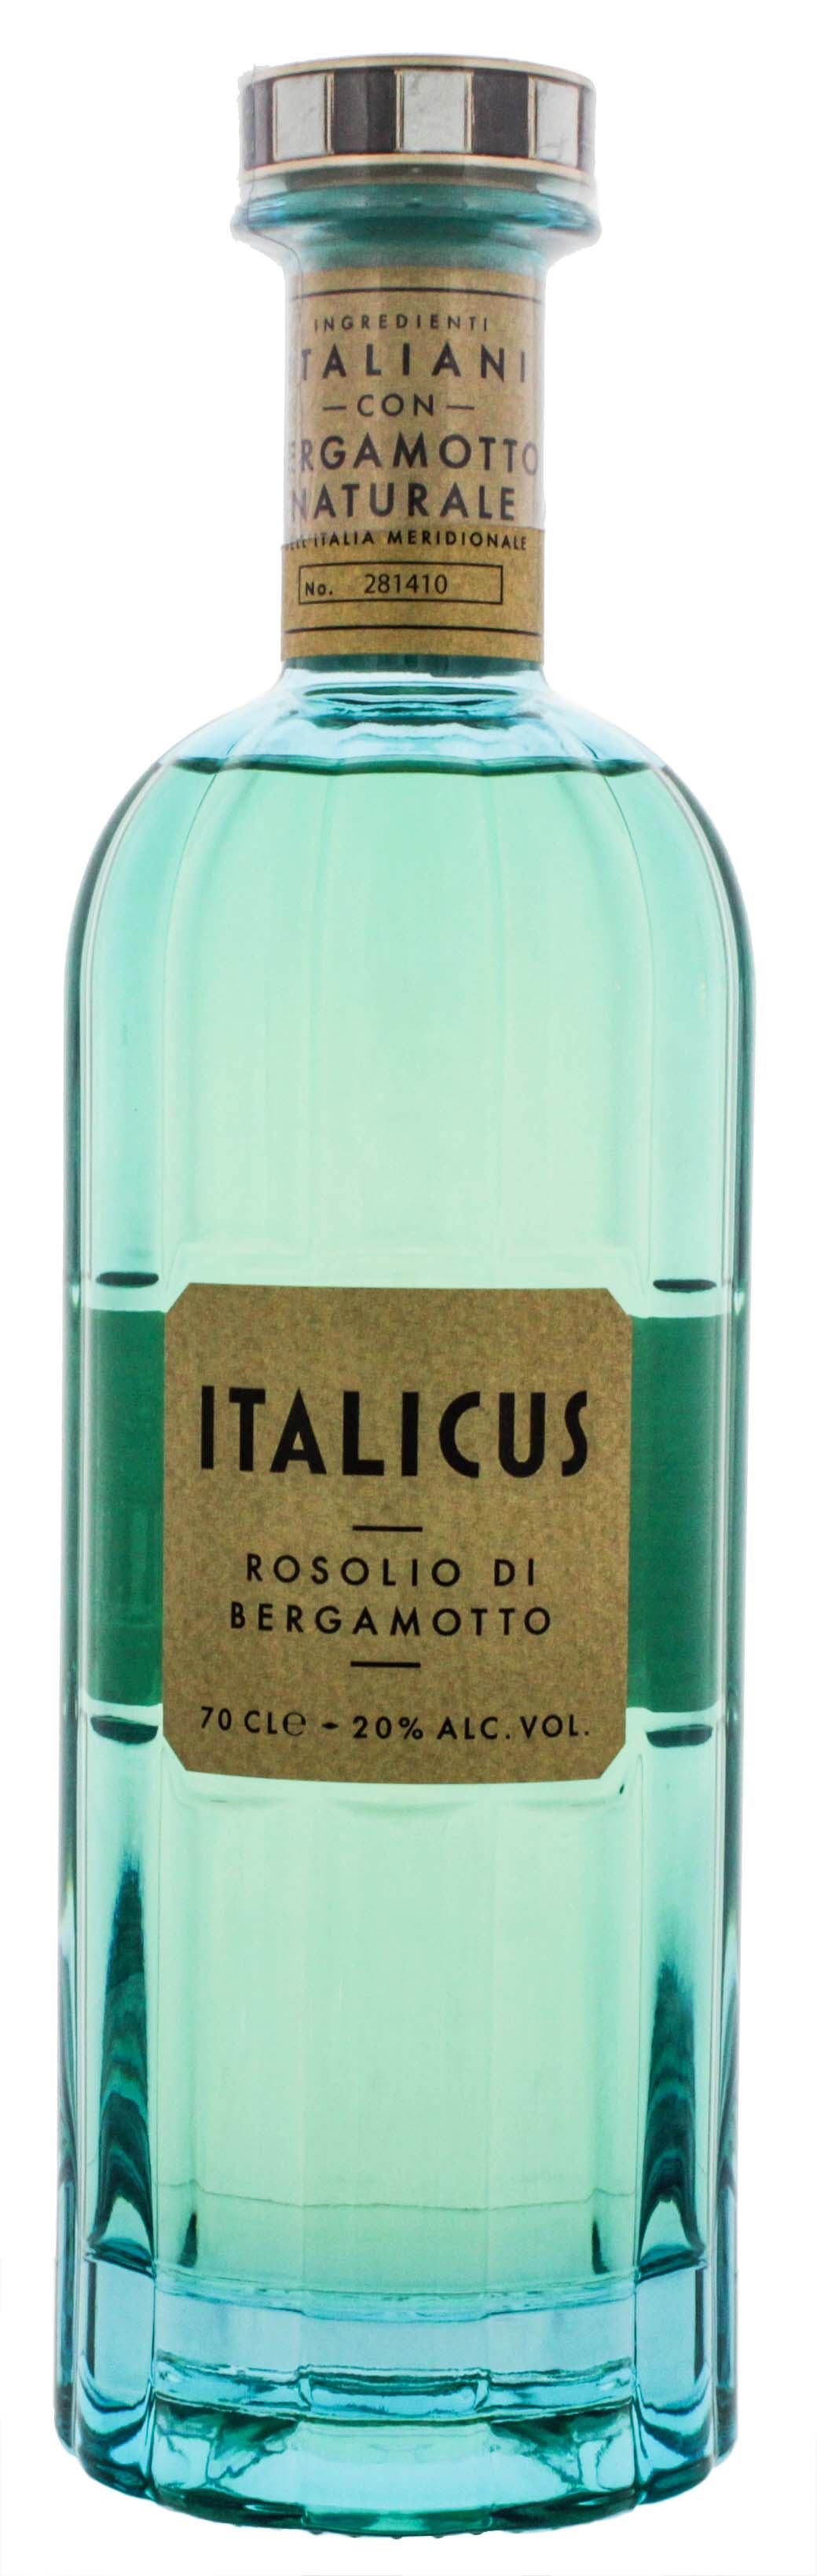 Italicus Rosolio di Bergamotto Liqueur 0,7L jetzt kaufen im Drinkology  Online Shop!